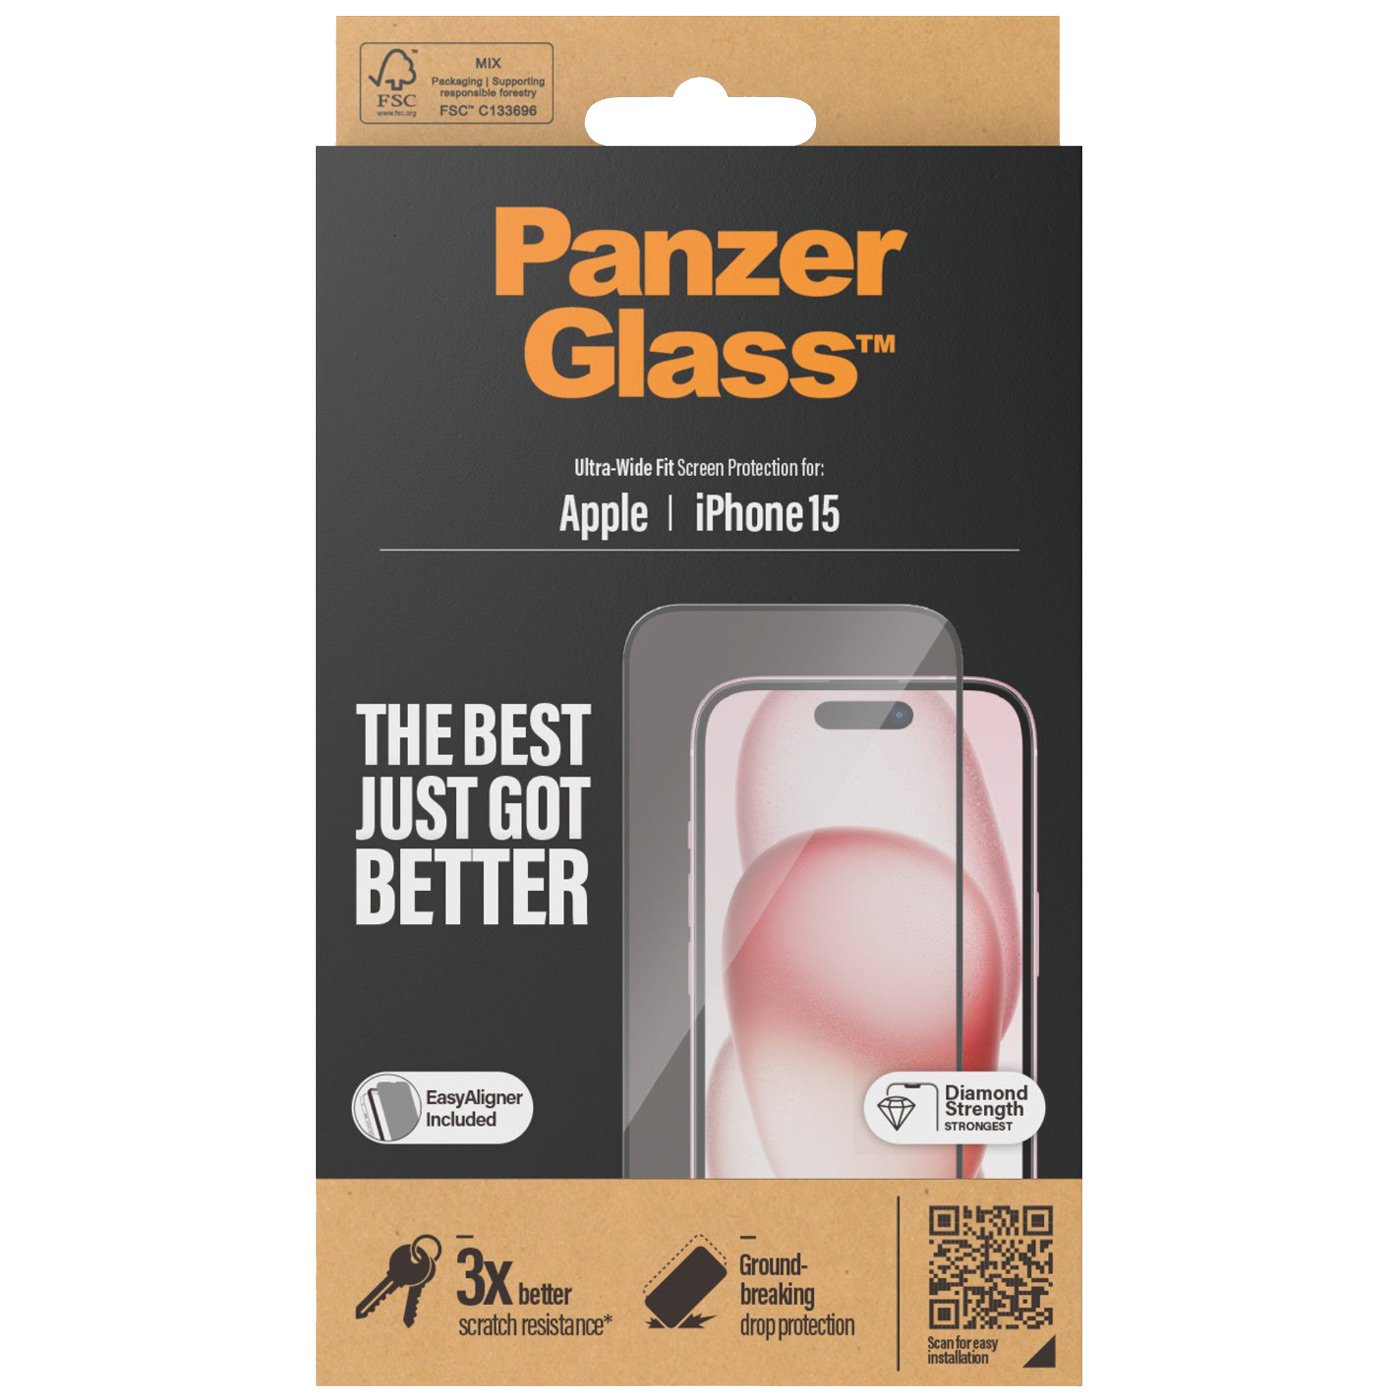 PanzerGlass Ultra-Wide Fit t/iPhone 15